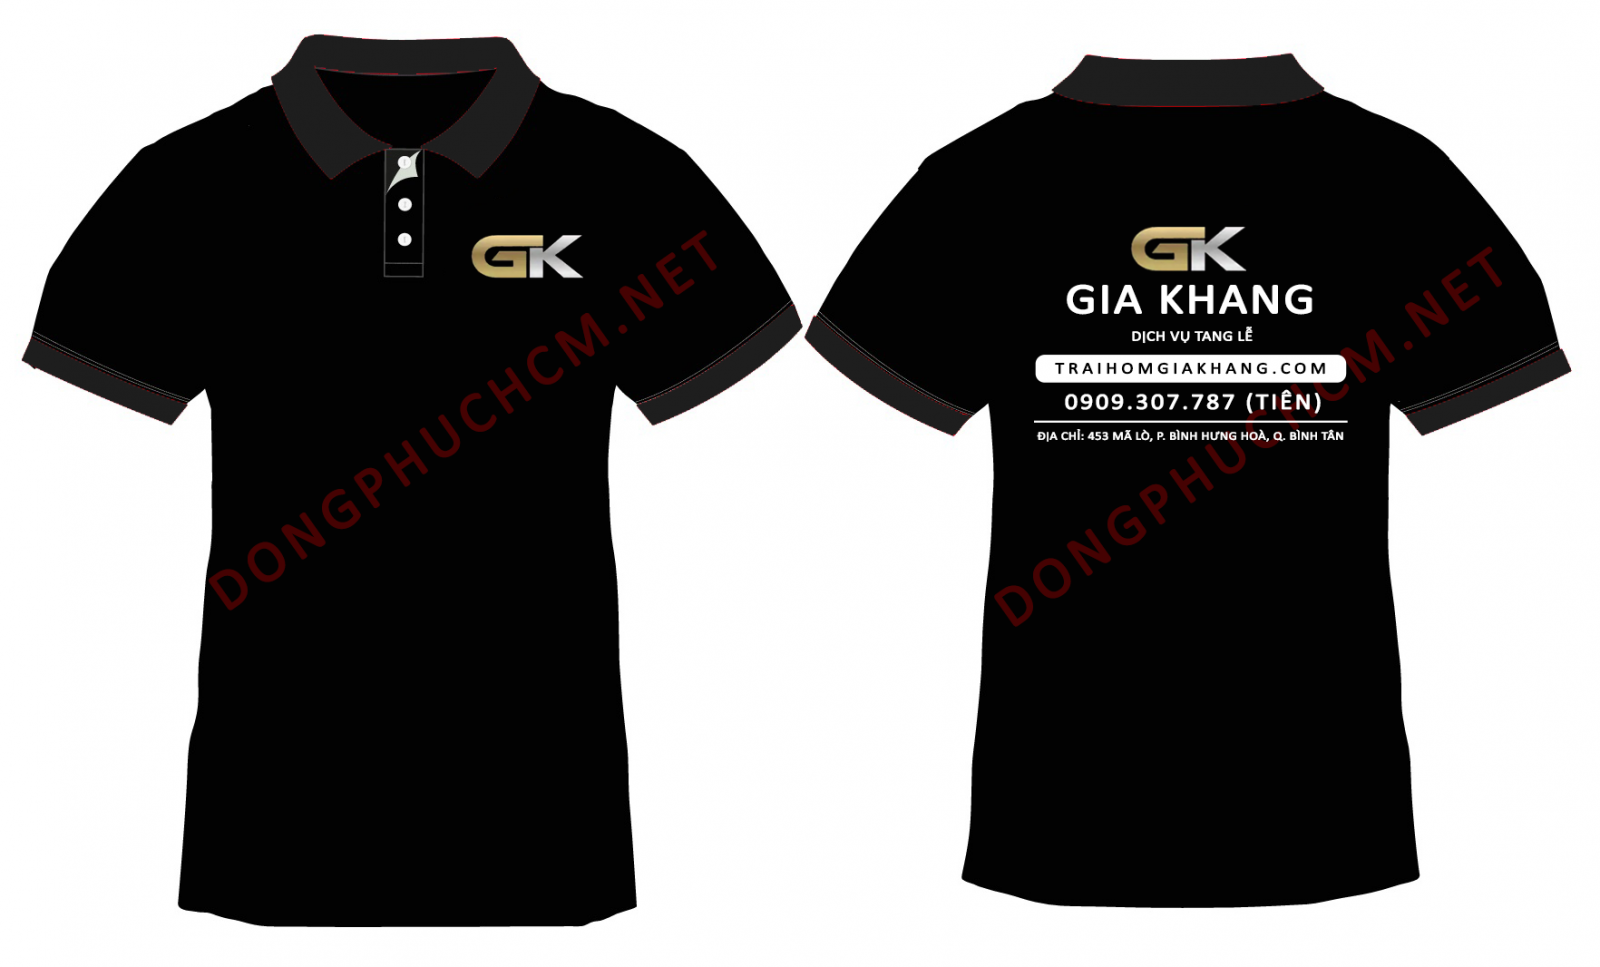 Khang Gia Coffin camp uniform